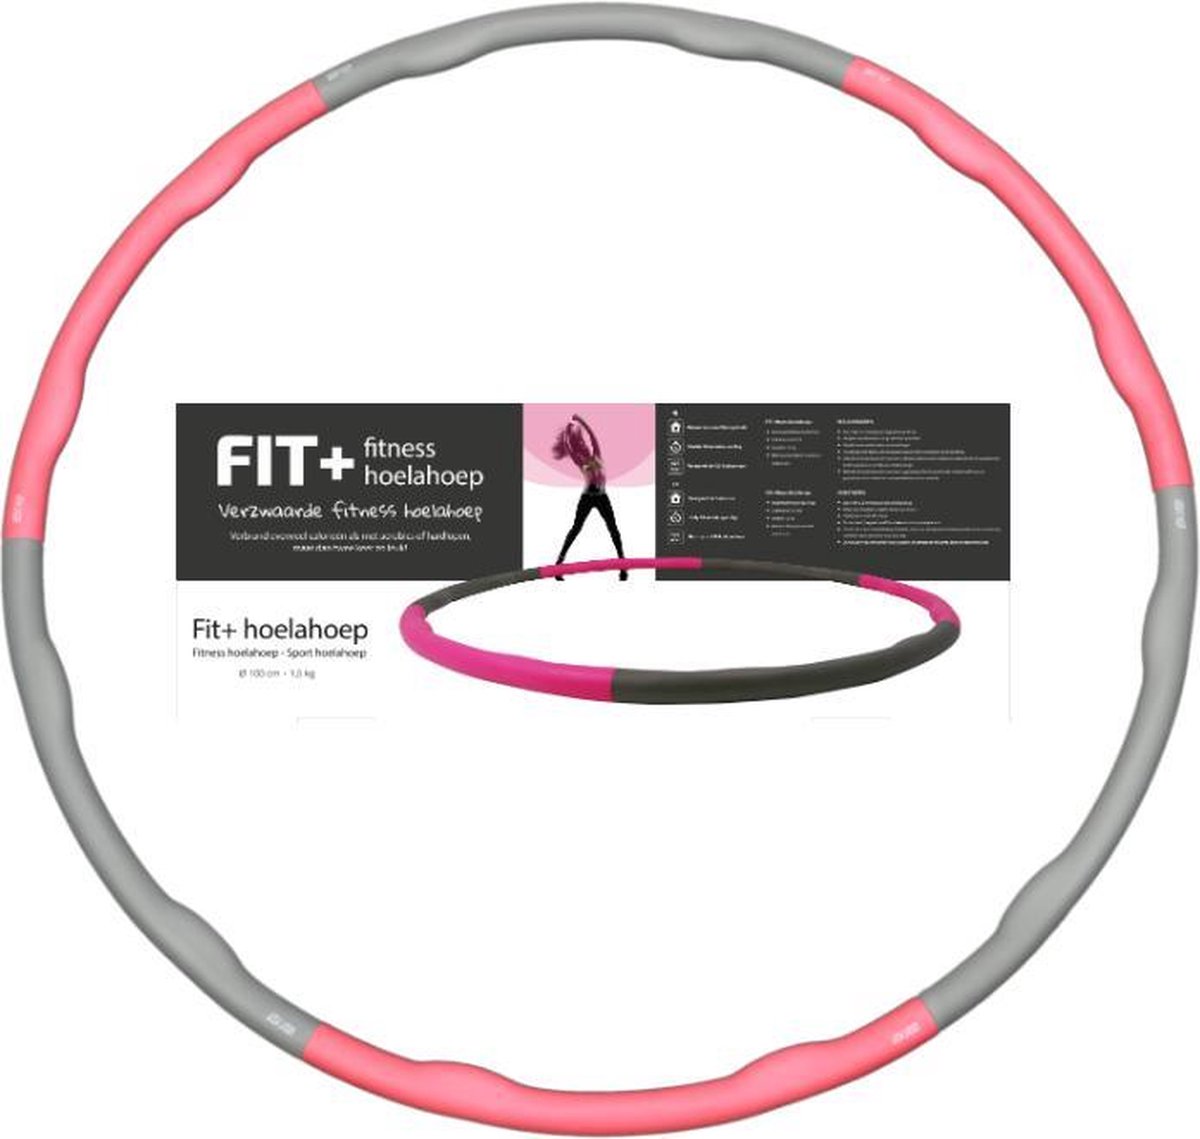 Sportbay FIT+ - Fitness hoelahoep - 1.5 kg - Ø 100 cm - Roze/Grijs - Sportbay